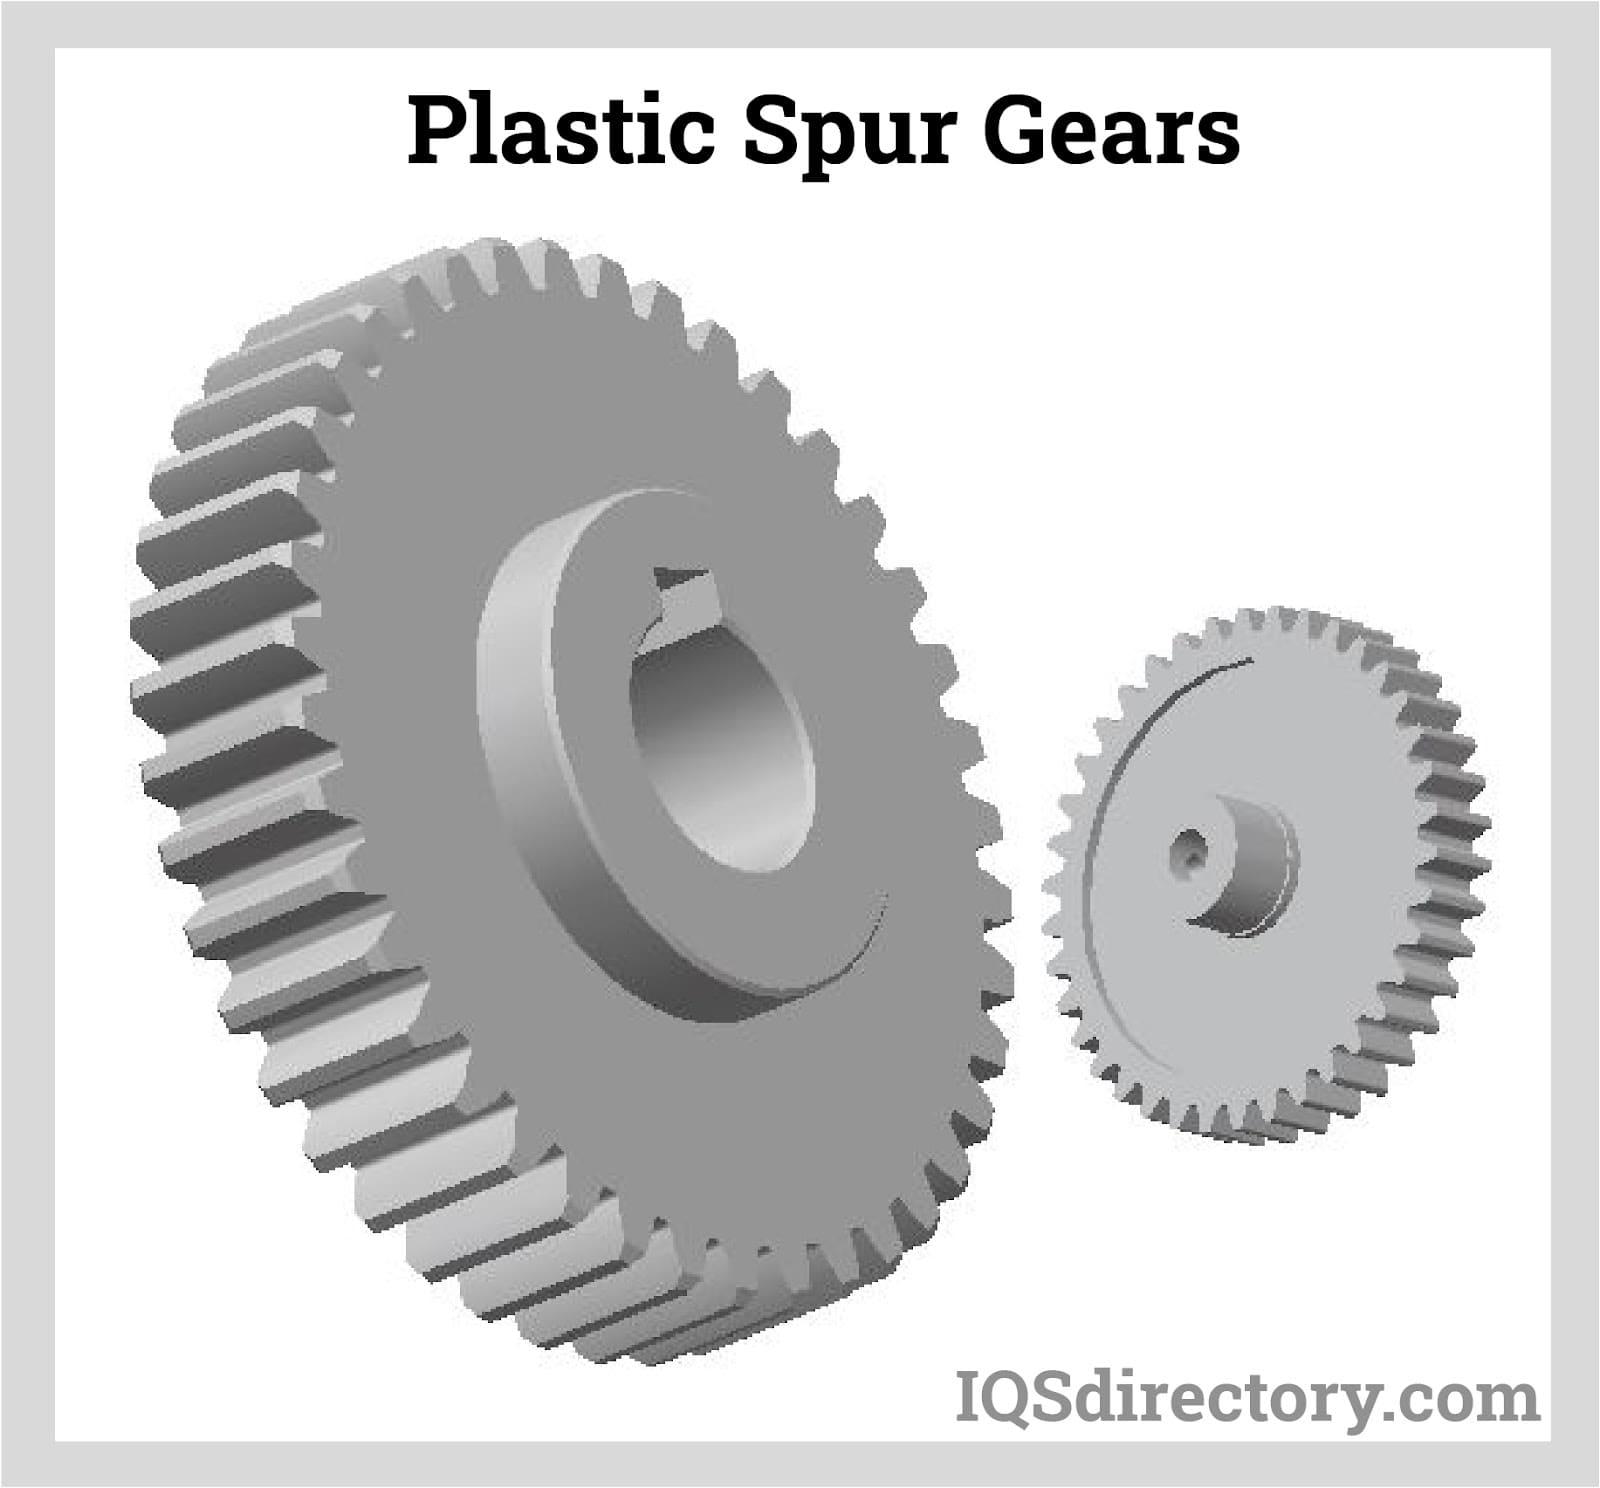 Plastic Spur Gears